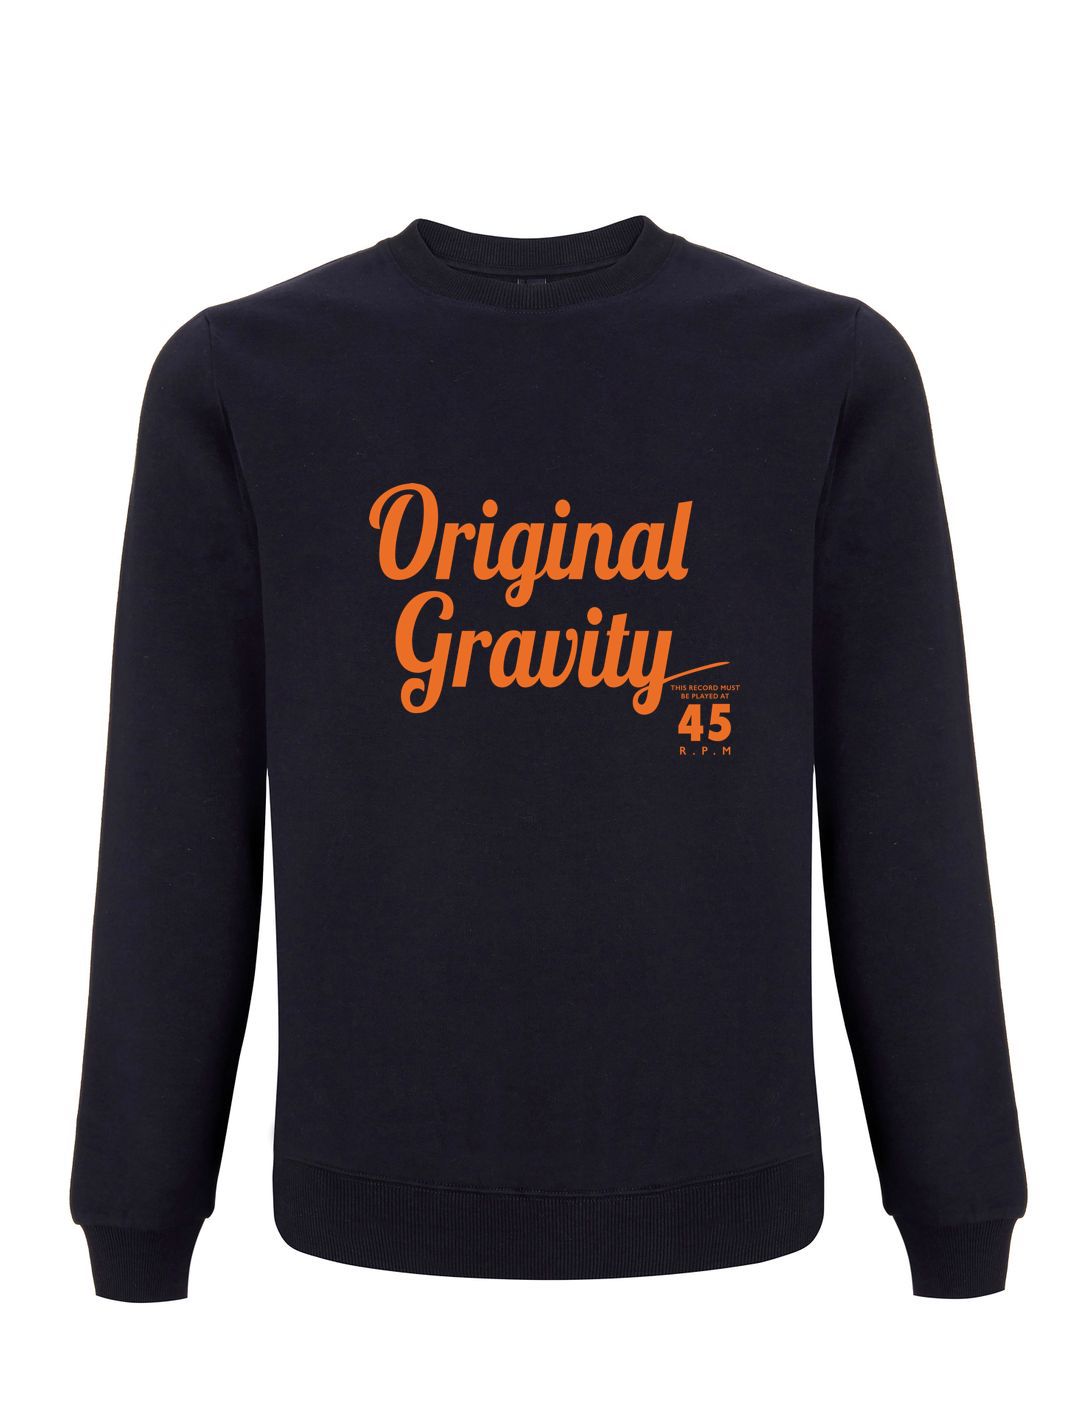 PLAYS at 45 RPM: Original Gravity Records Sweatshirt (3 Colour Options)